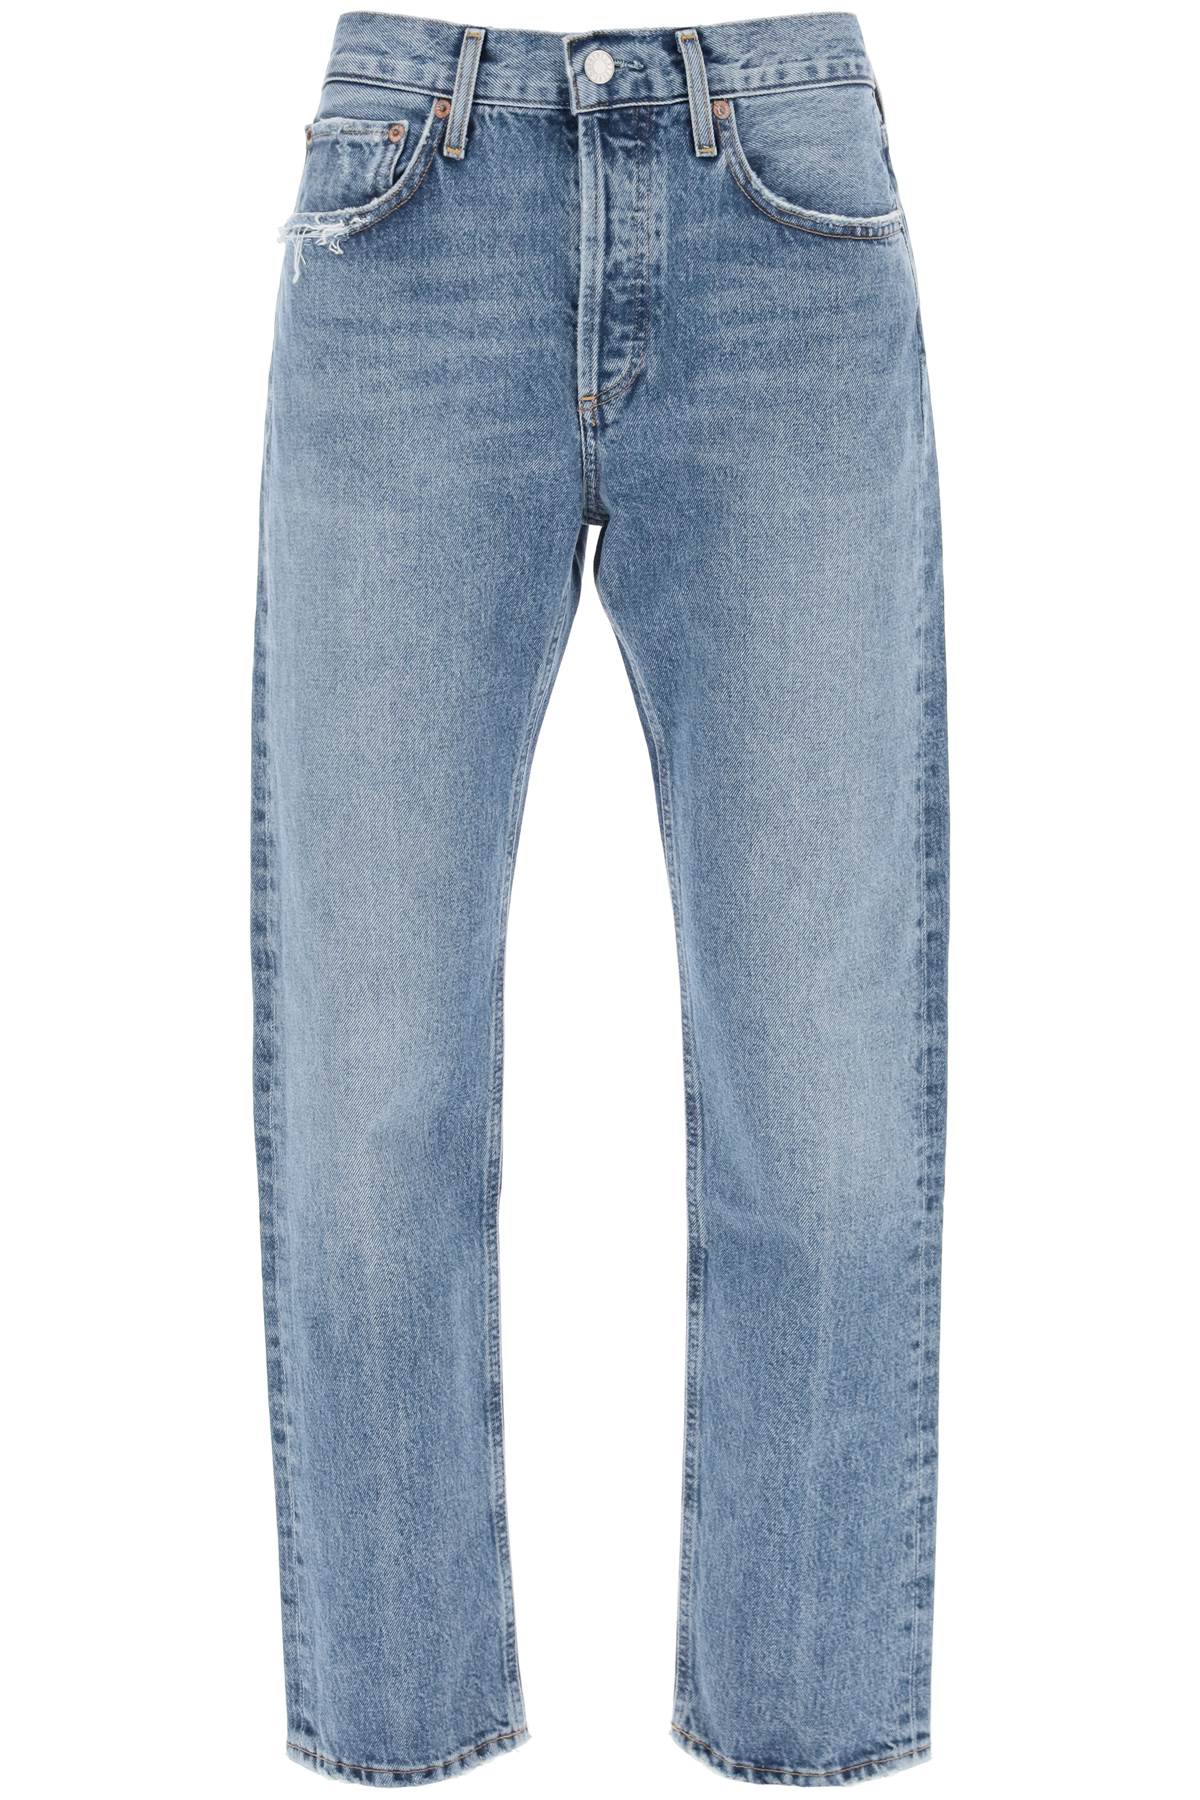 Agolde parker cropped jeans-0